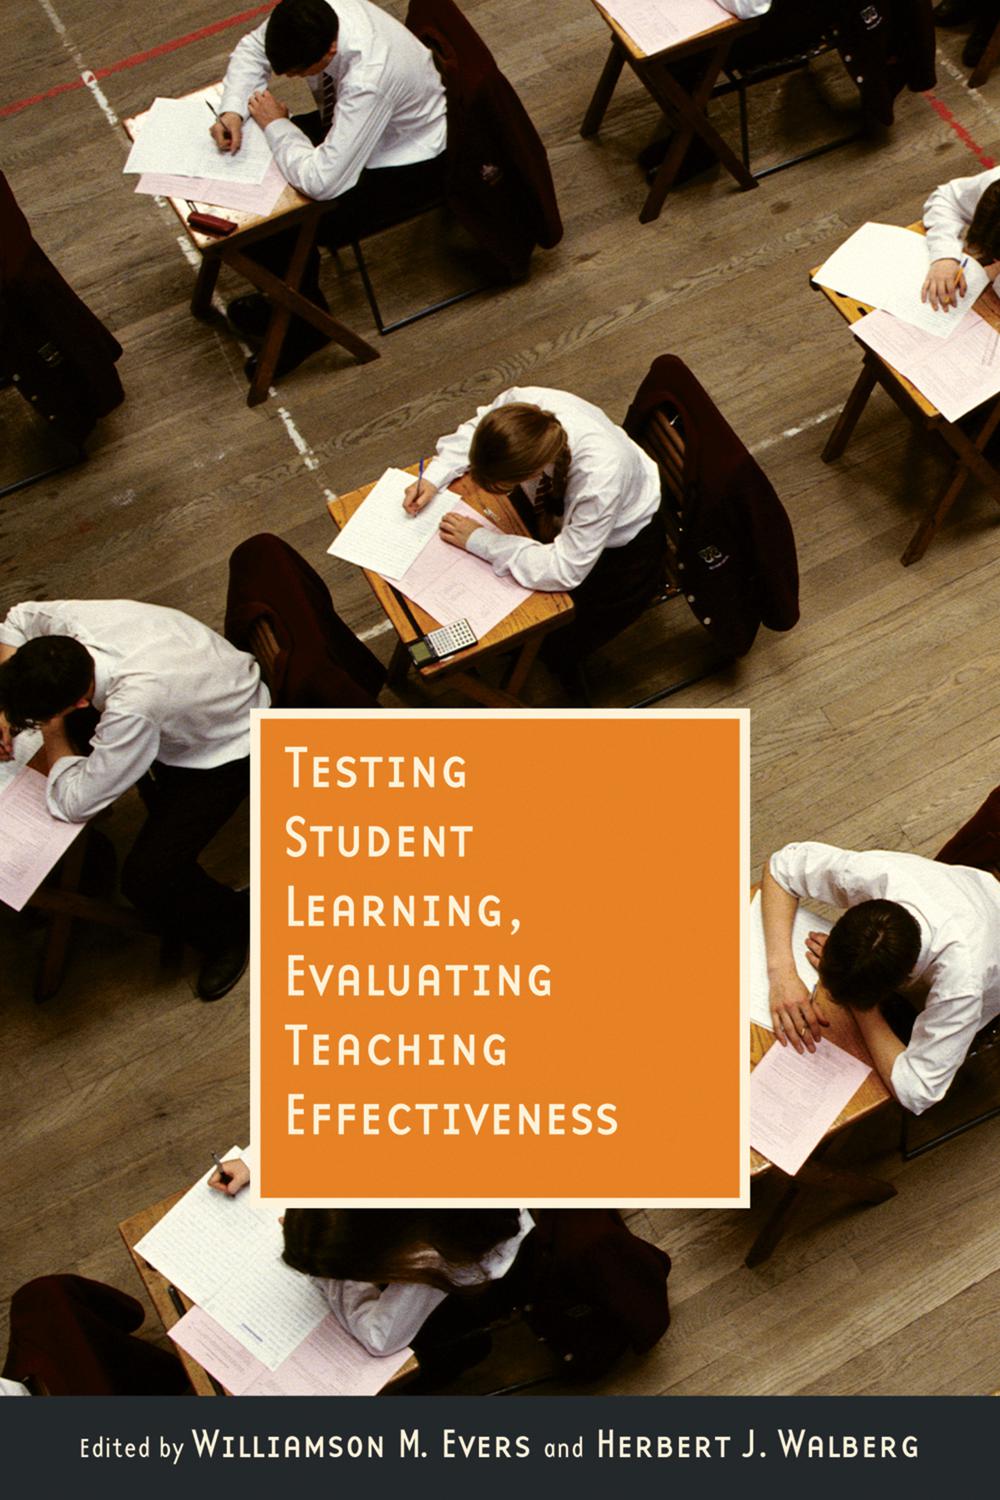 Testing Student Learning, Evaluating Teaching Effectiveness - Williamson F. Evers, Herbert J. Walberg